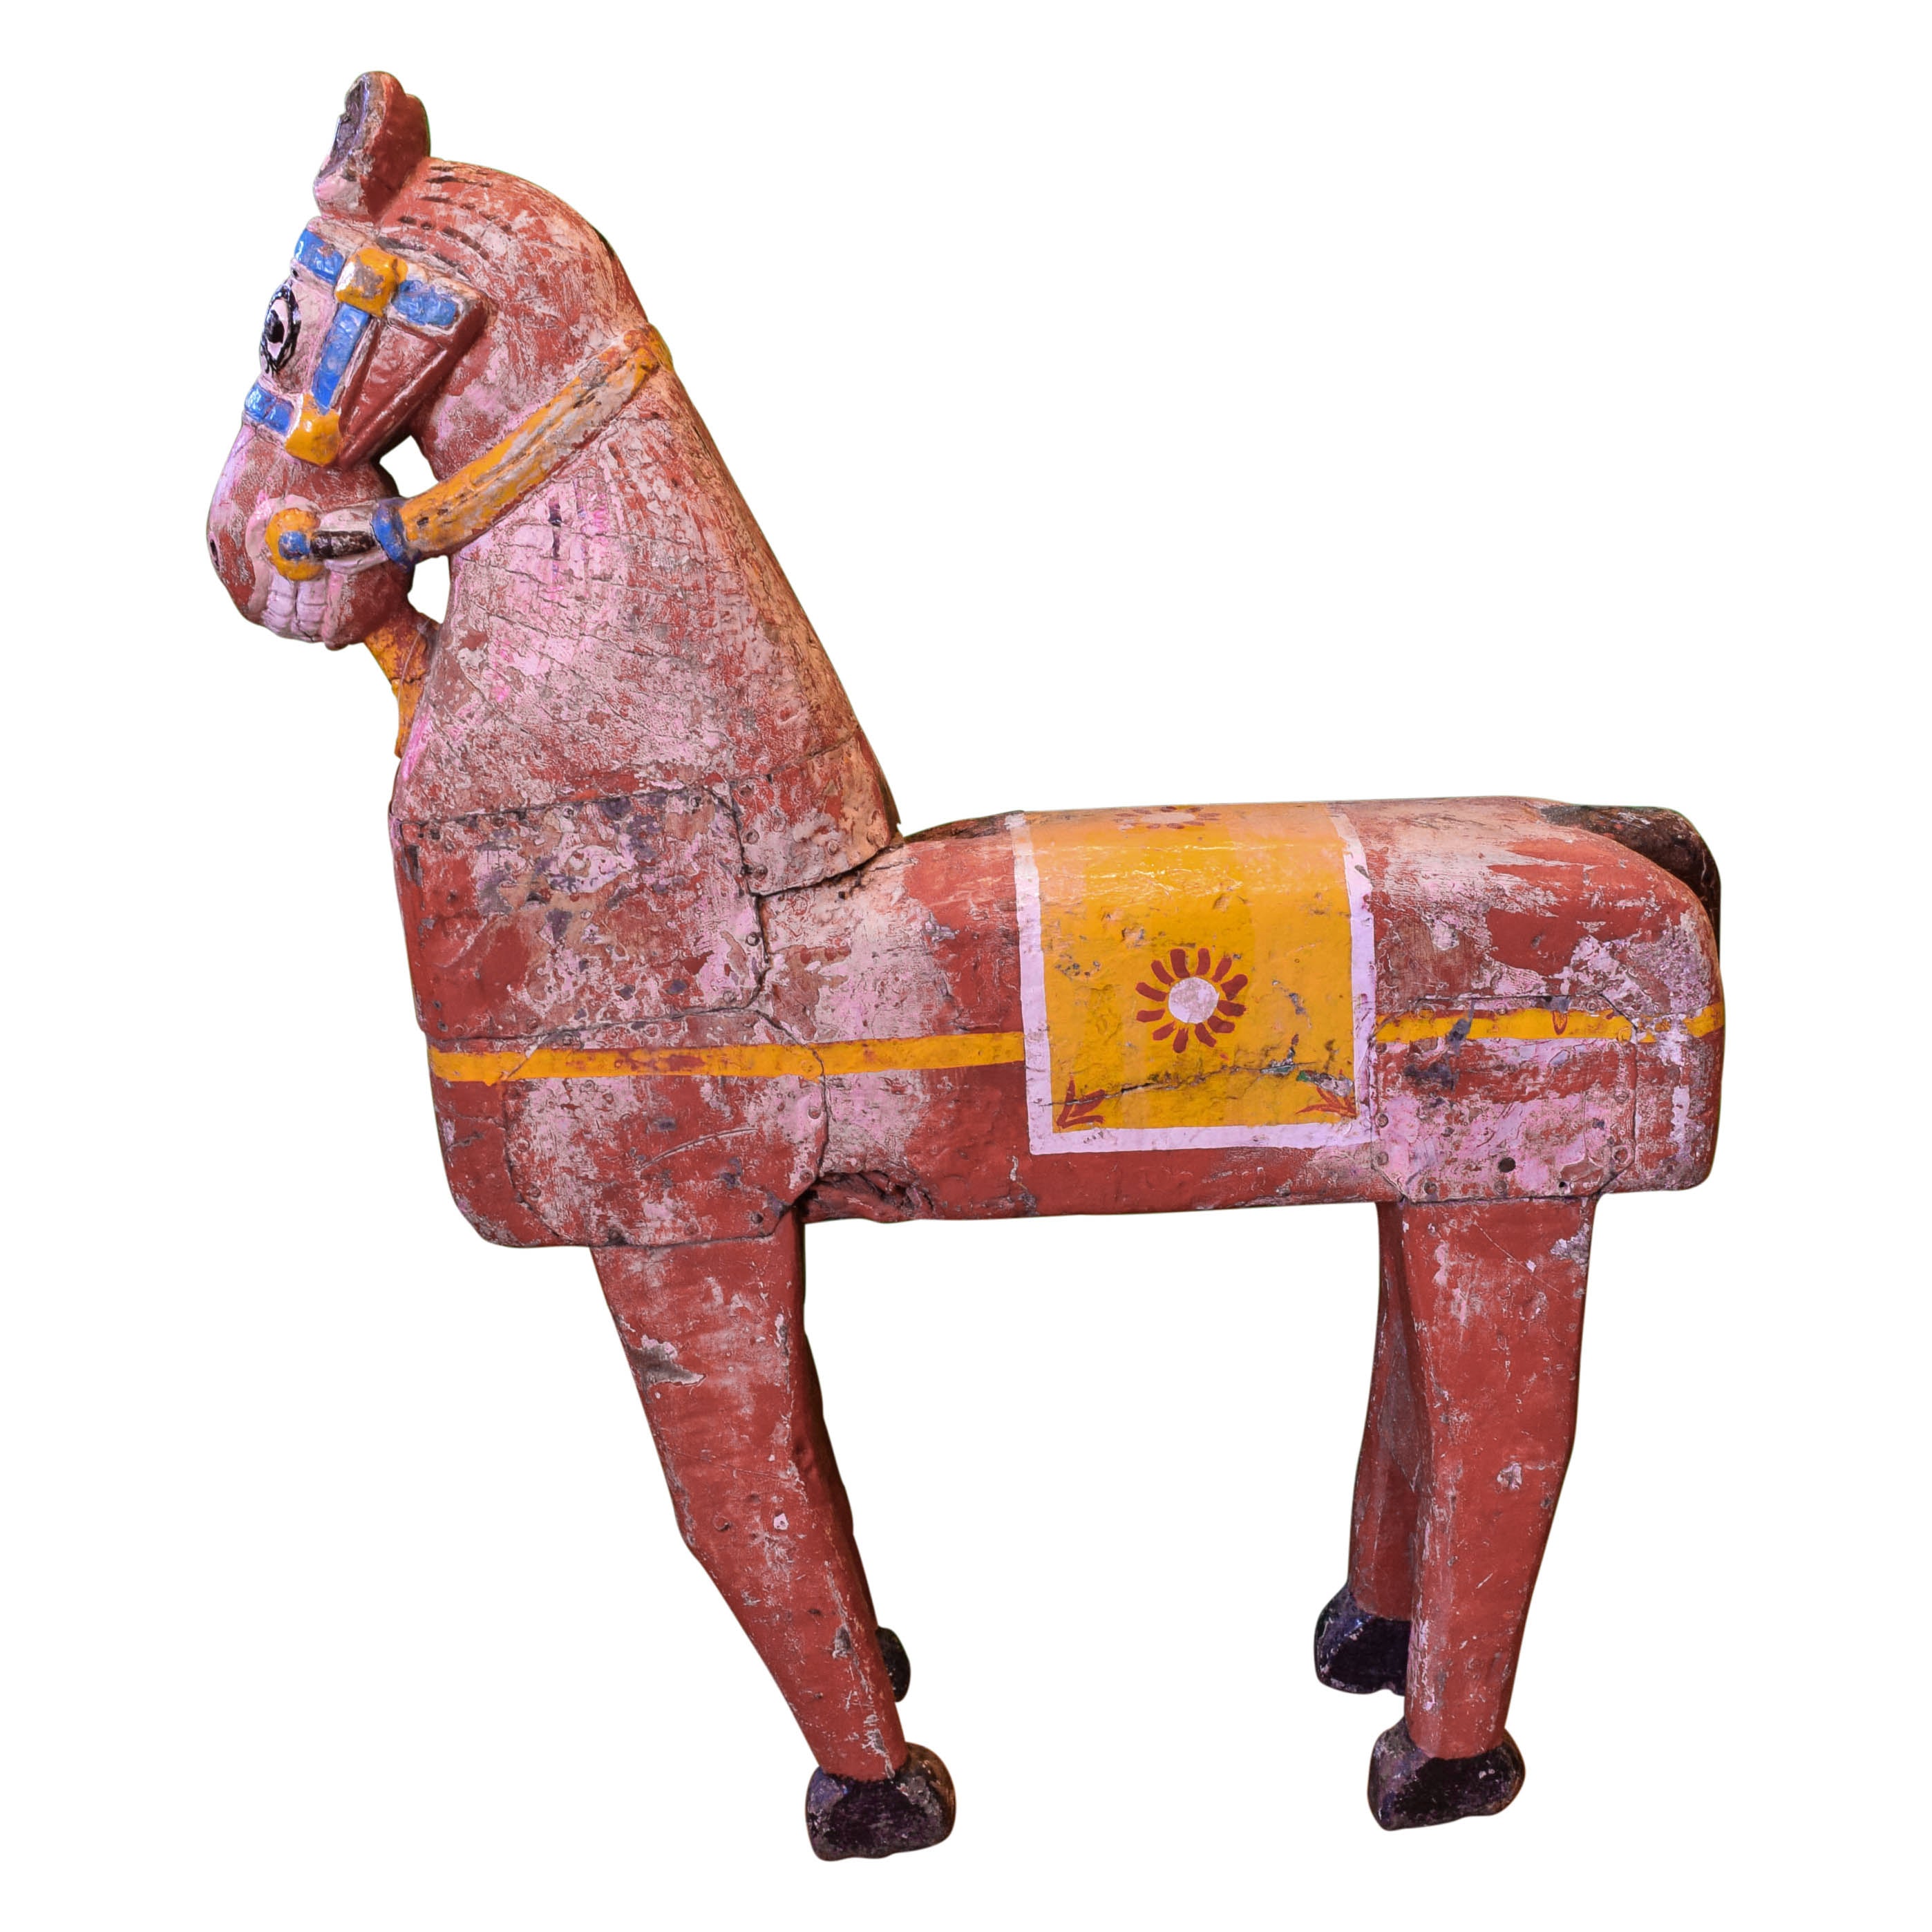 Carousel Horse, Furnishings, Decor, Folk Item